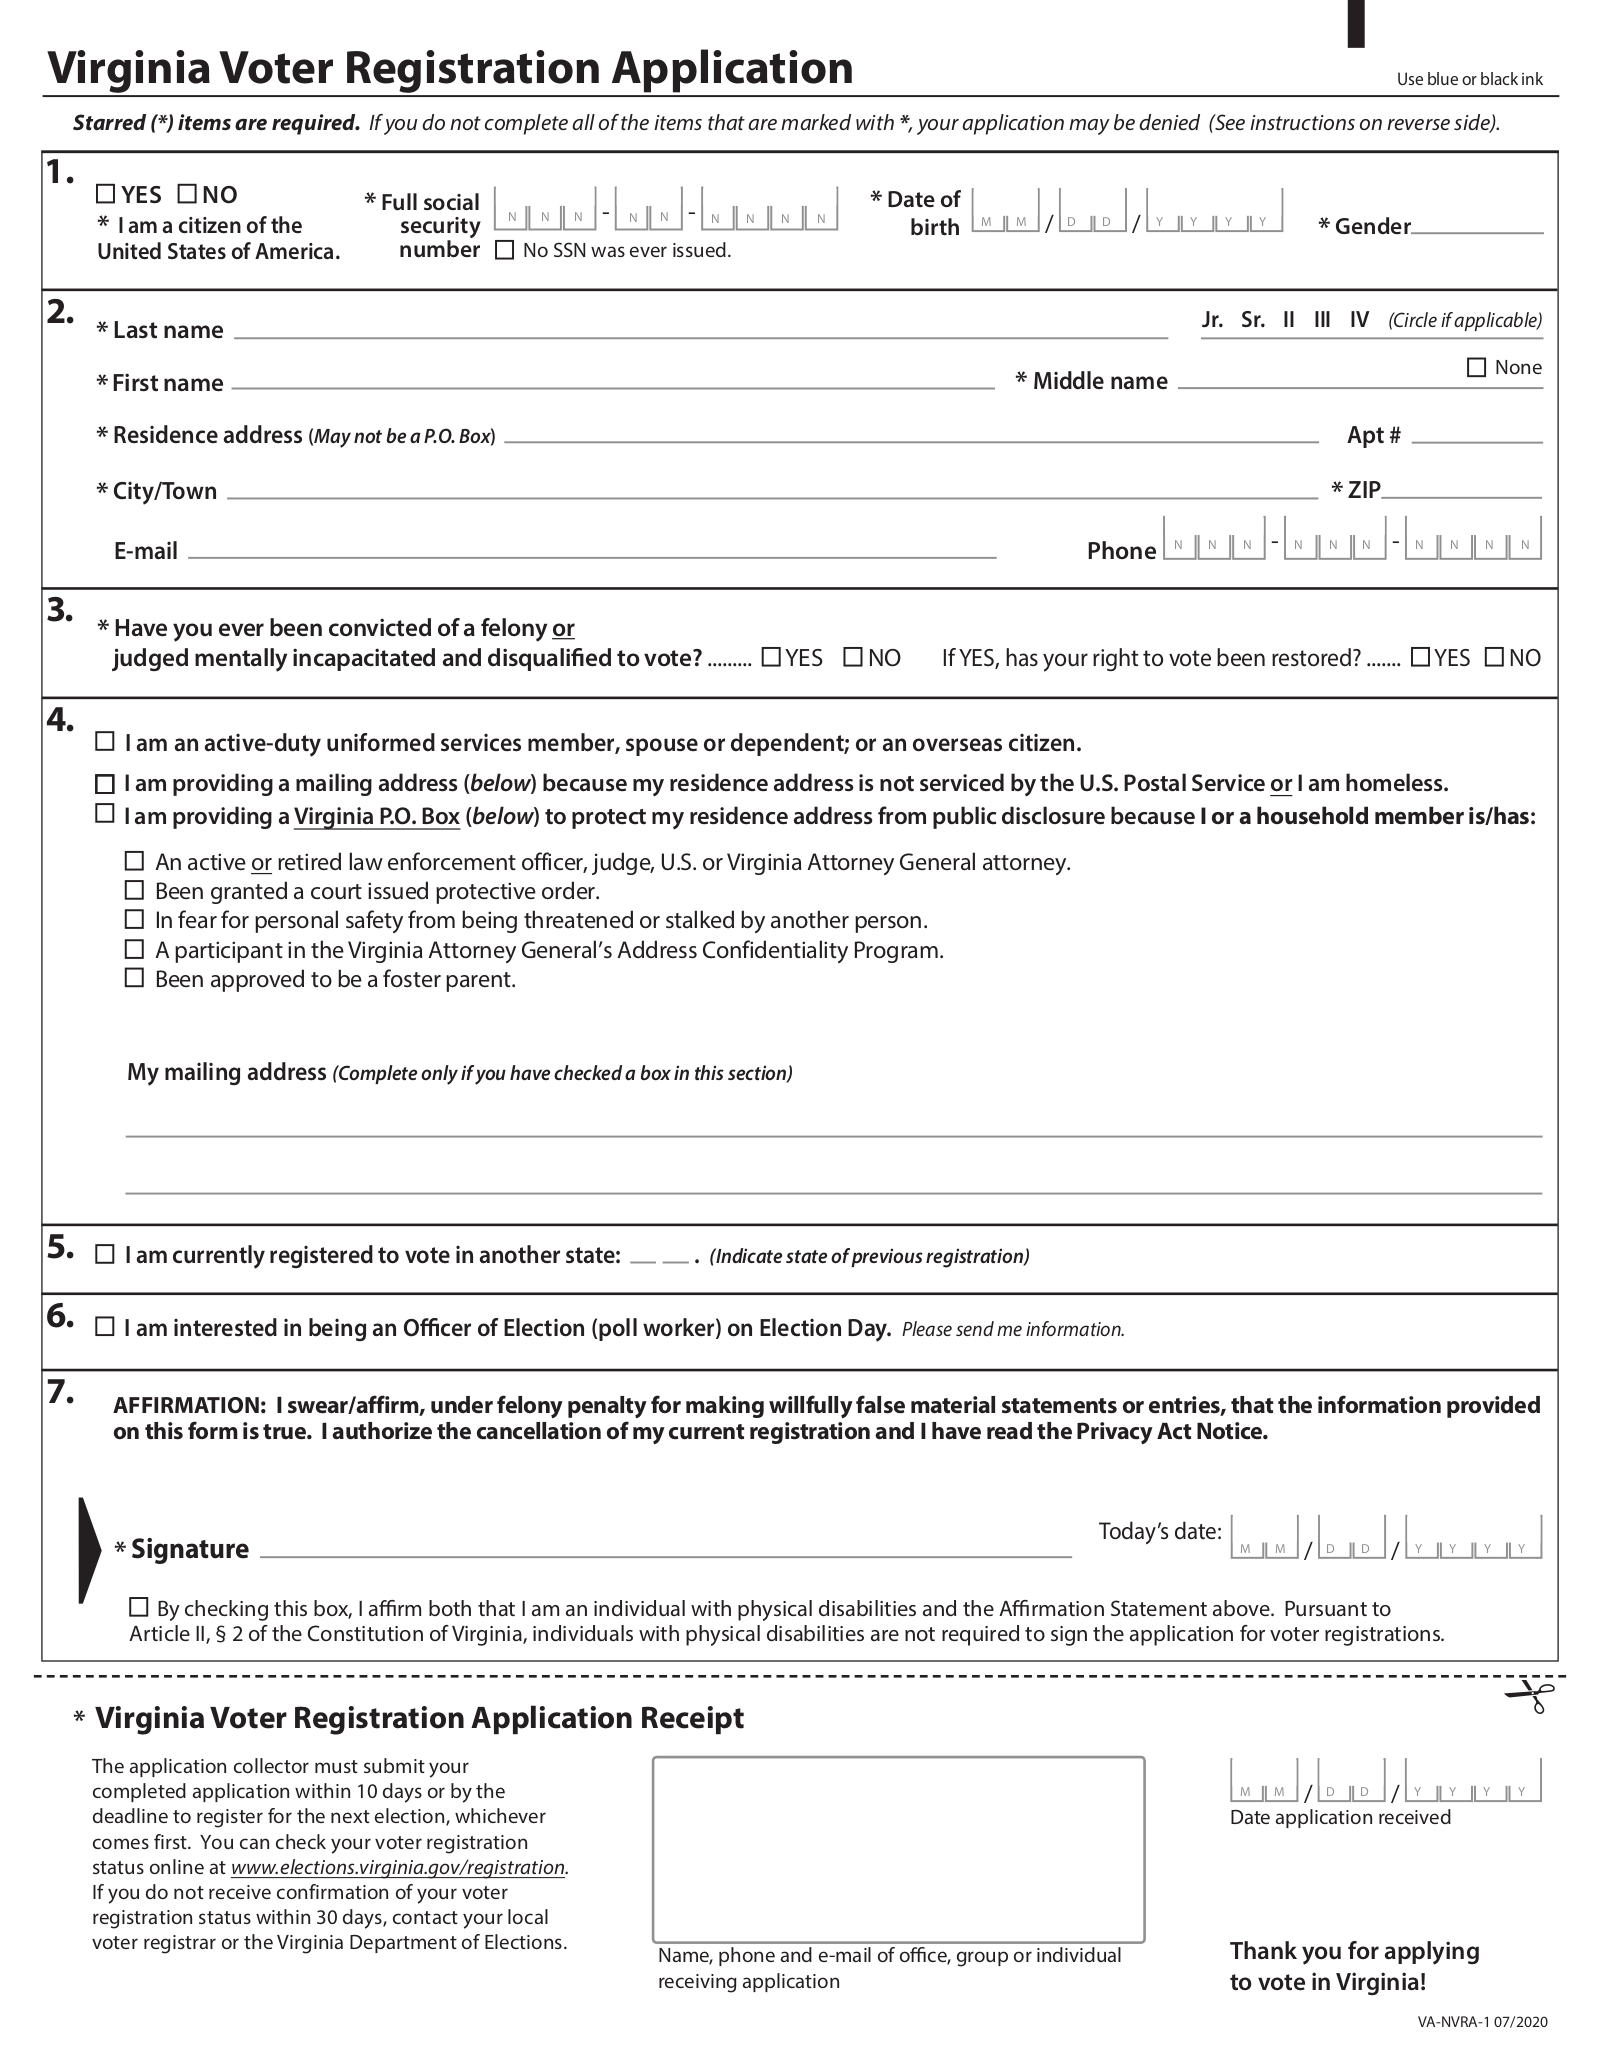 Virginia Voter Registration Form – Register to Vote in VA